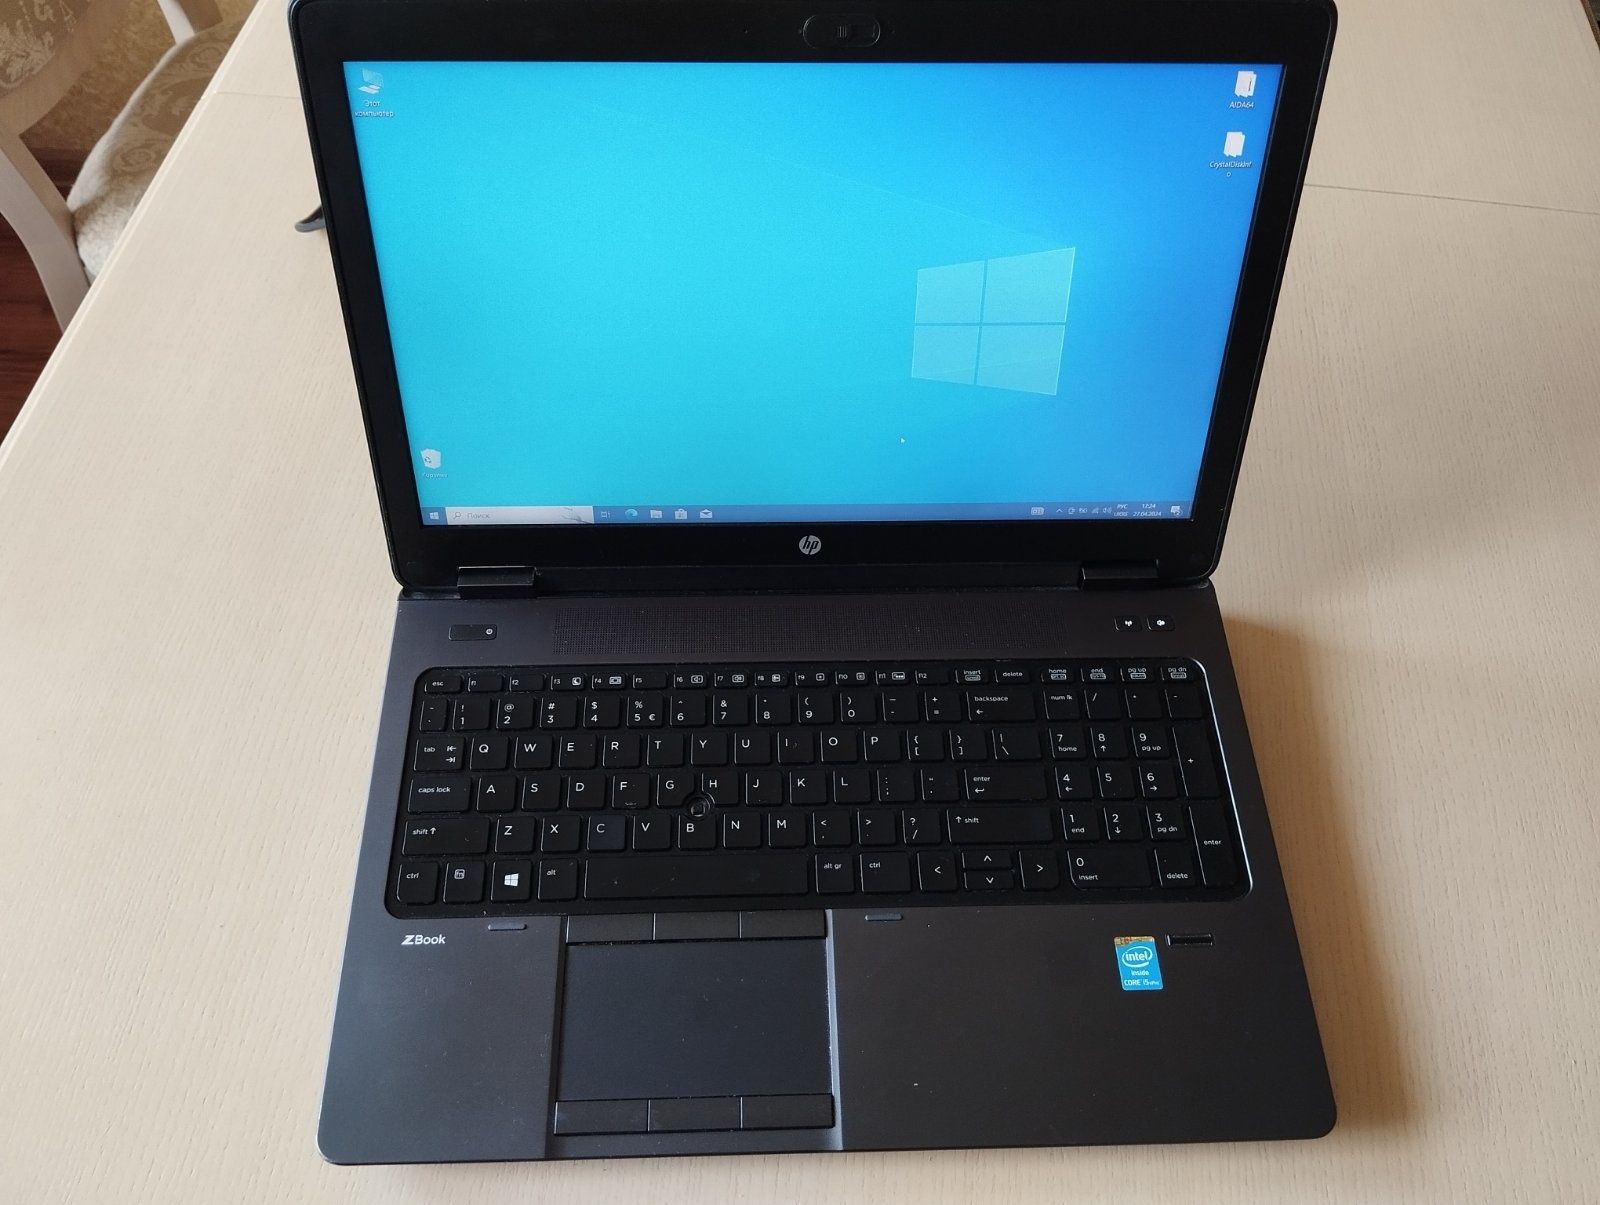 Ноутбук HP Zbook 15 i5-4330m, Quadro K1100M. 8/256 ssd. Windows 10 Pro